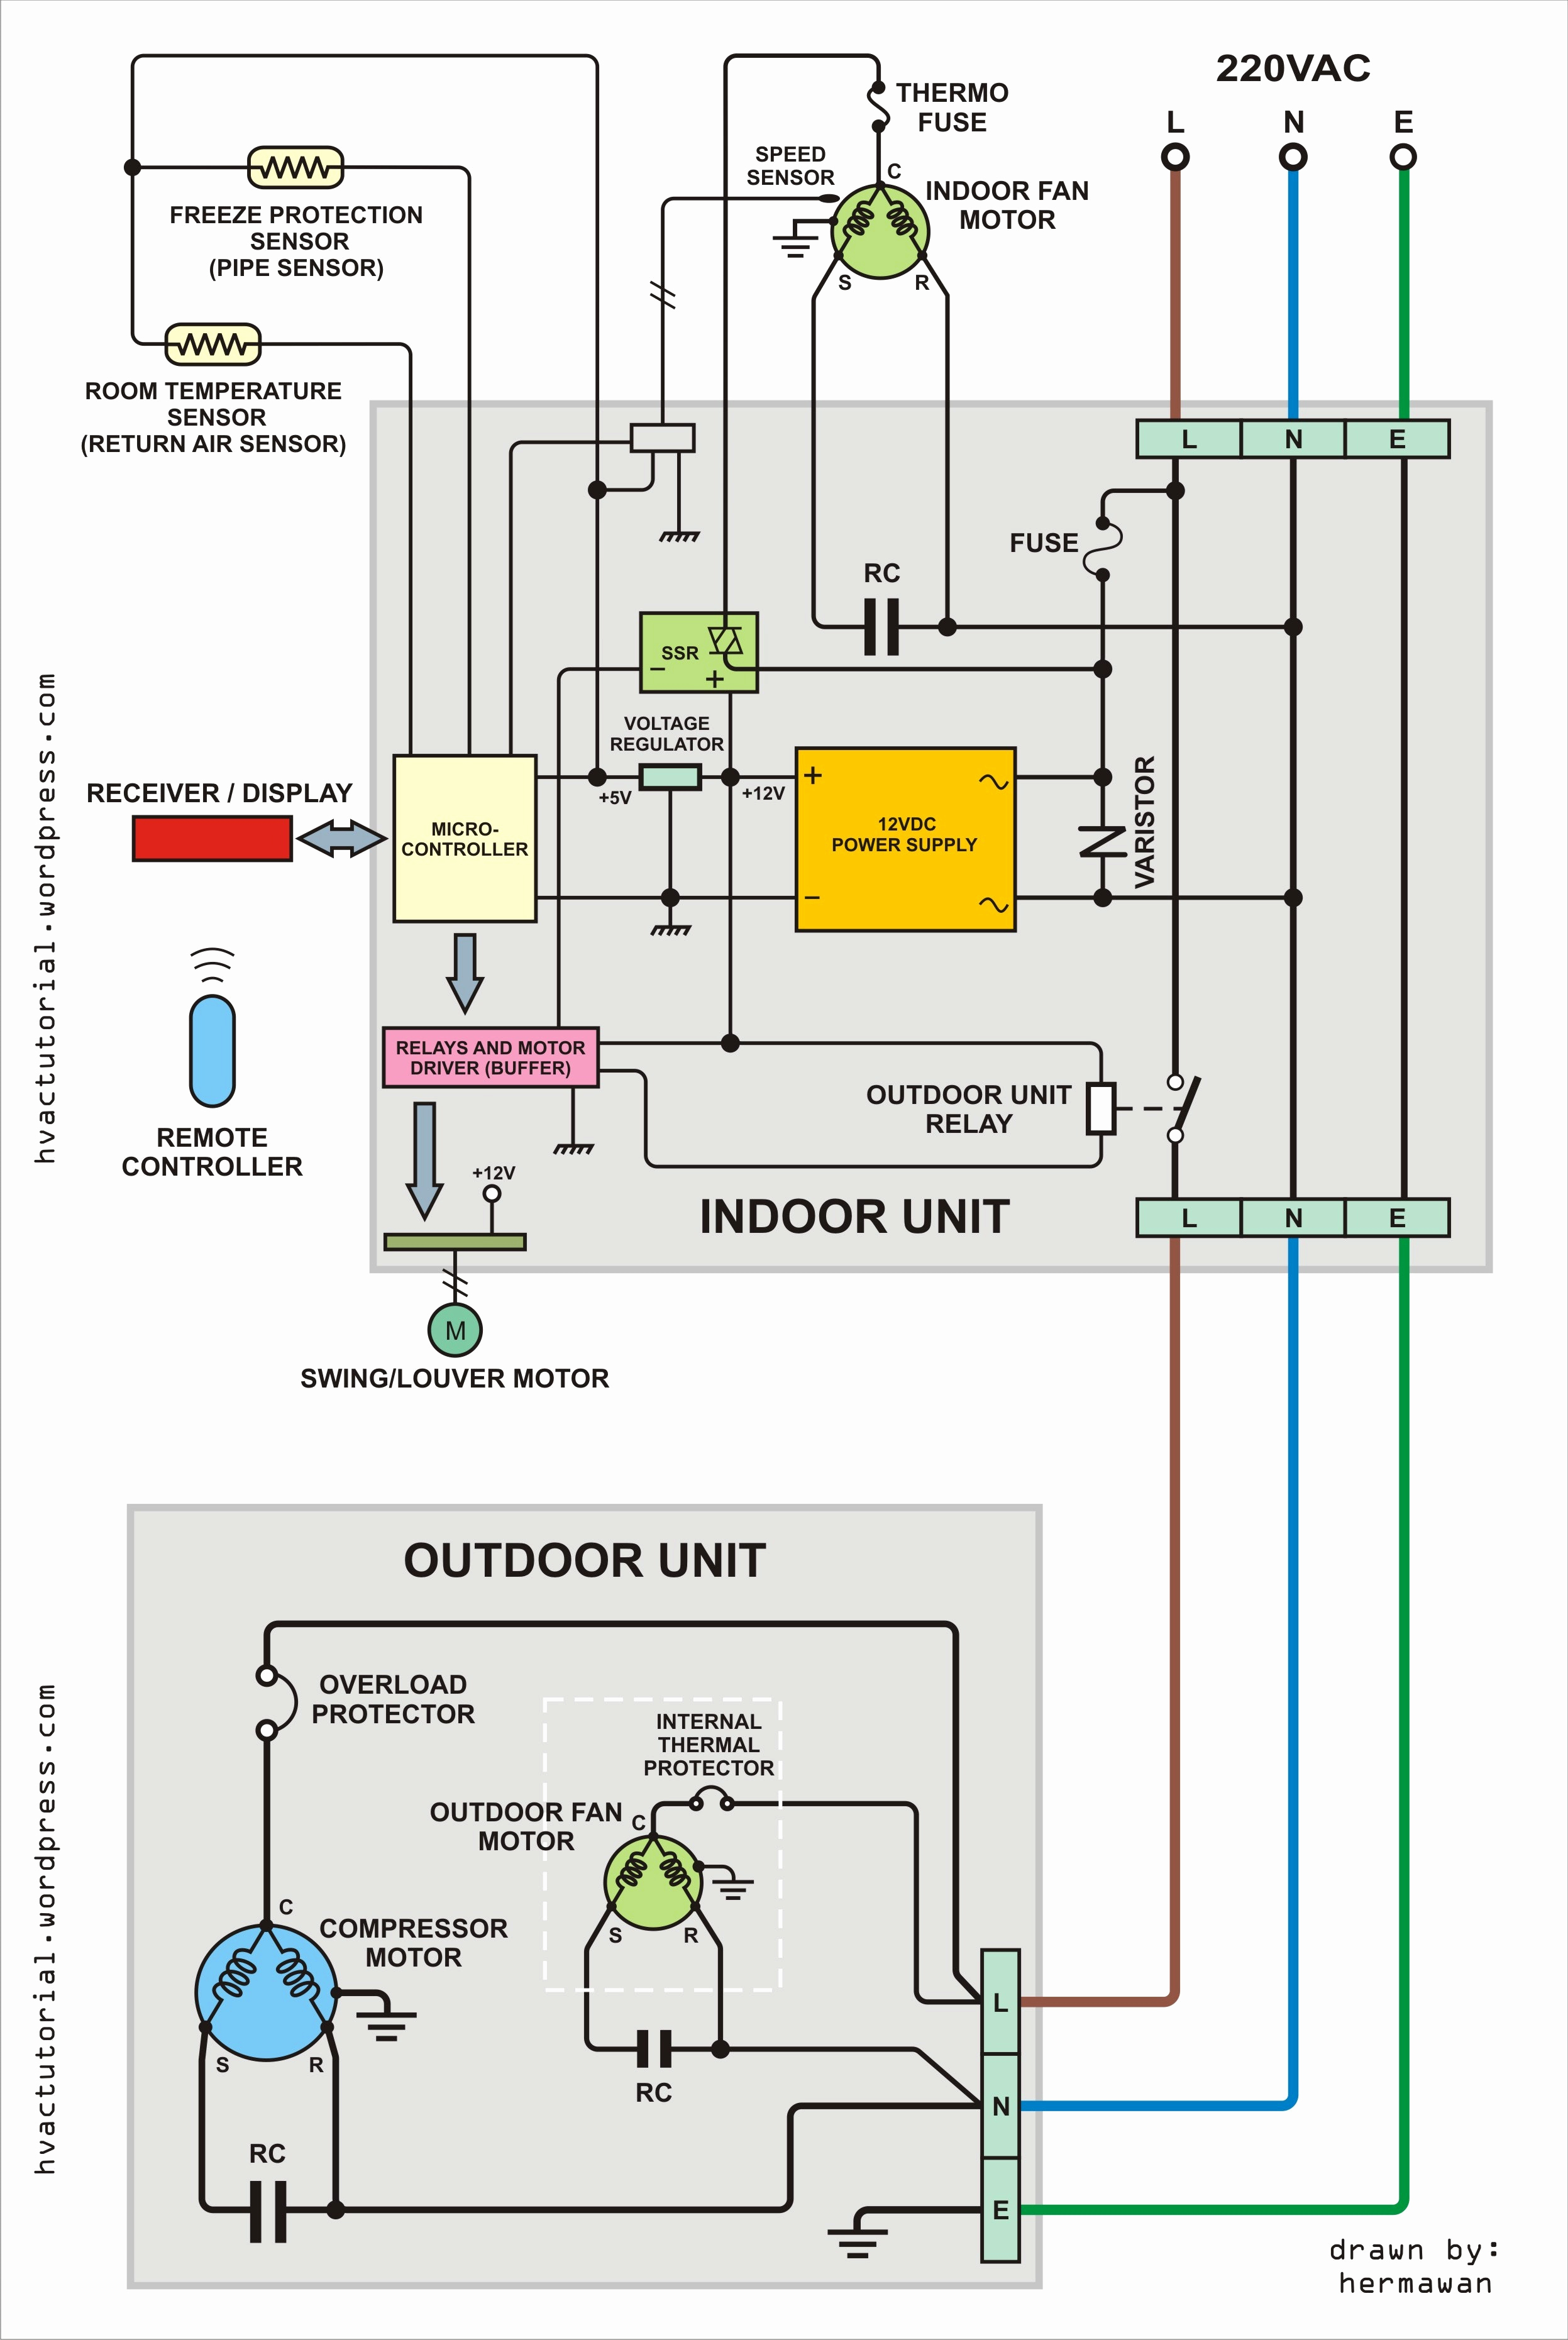 Air Conditioning Wiring Diagram | Wiring Diagram - Hvac Wiring Diagram